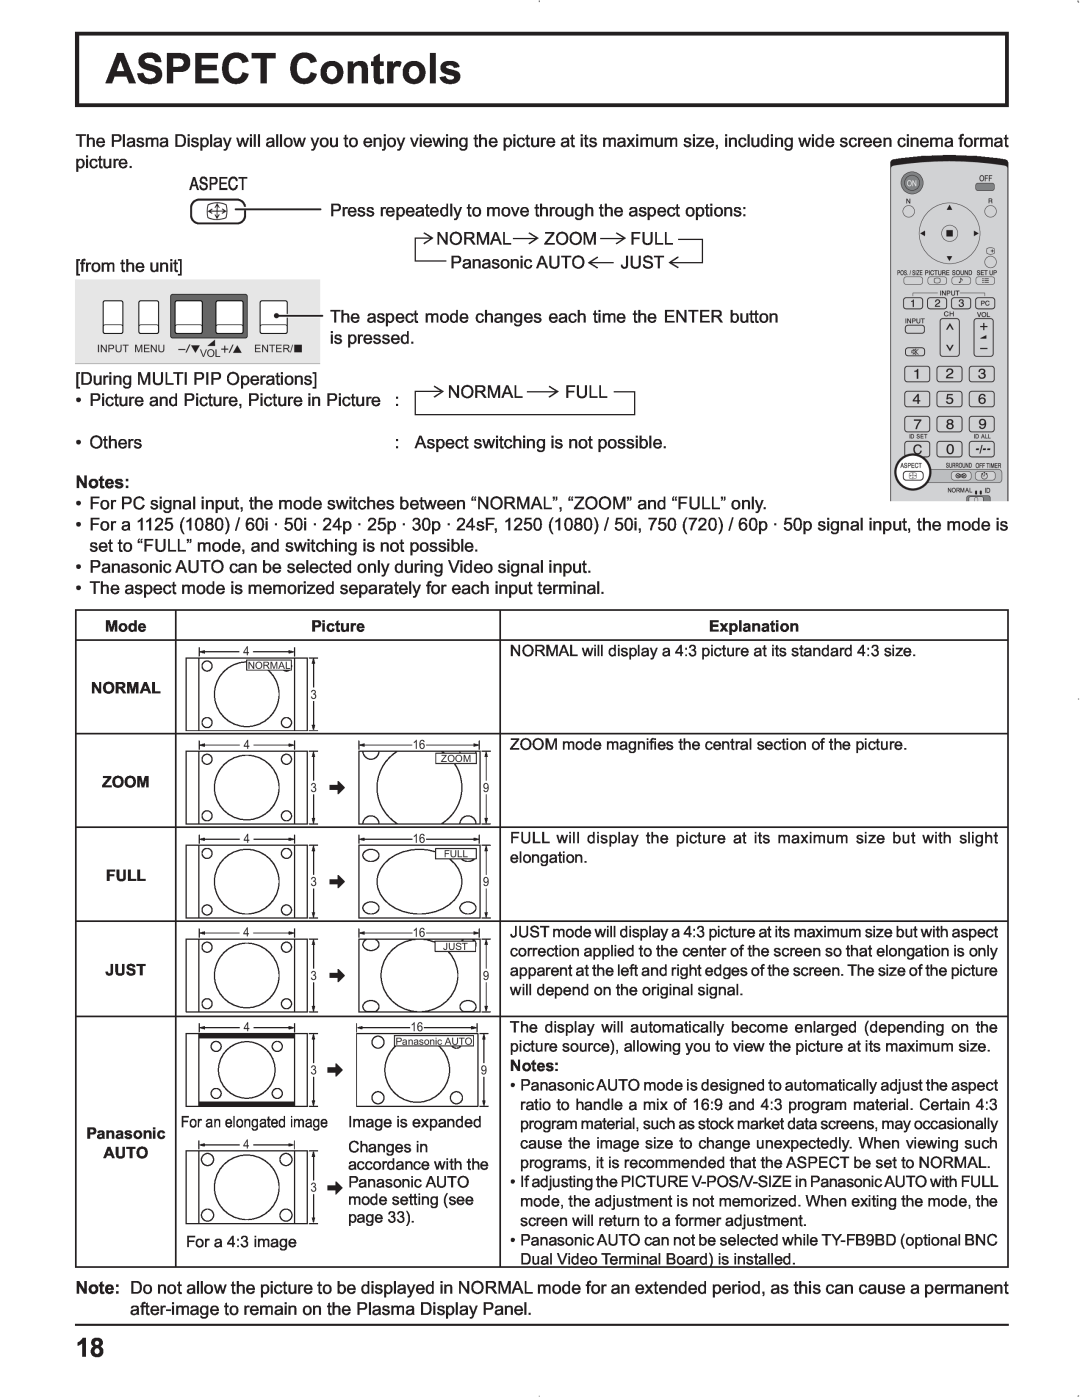 Panasonic TH-42PG9U, TH-37PR9U manual ASPECT Controls, Mode, Picture, Explanation, Normal, Zoom, Full, Just, Panasonic, Auto 